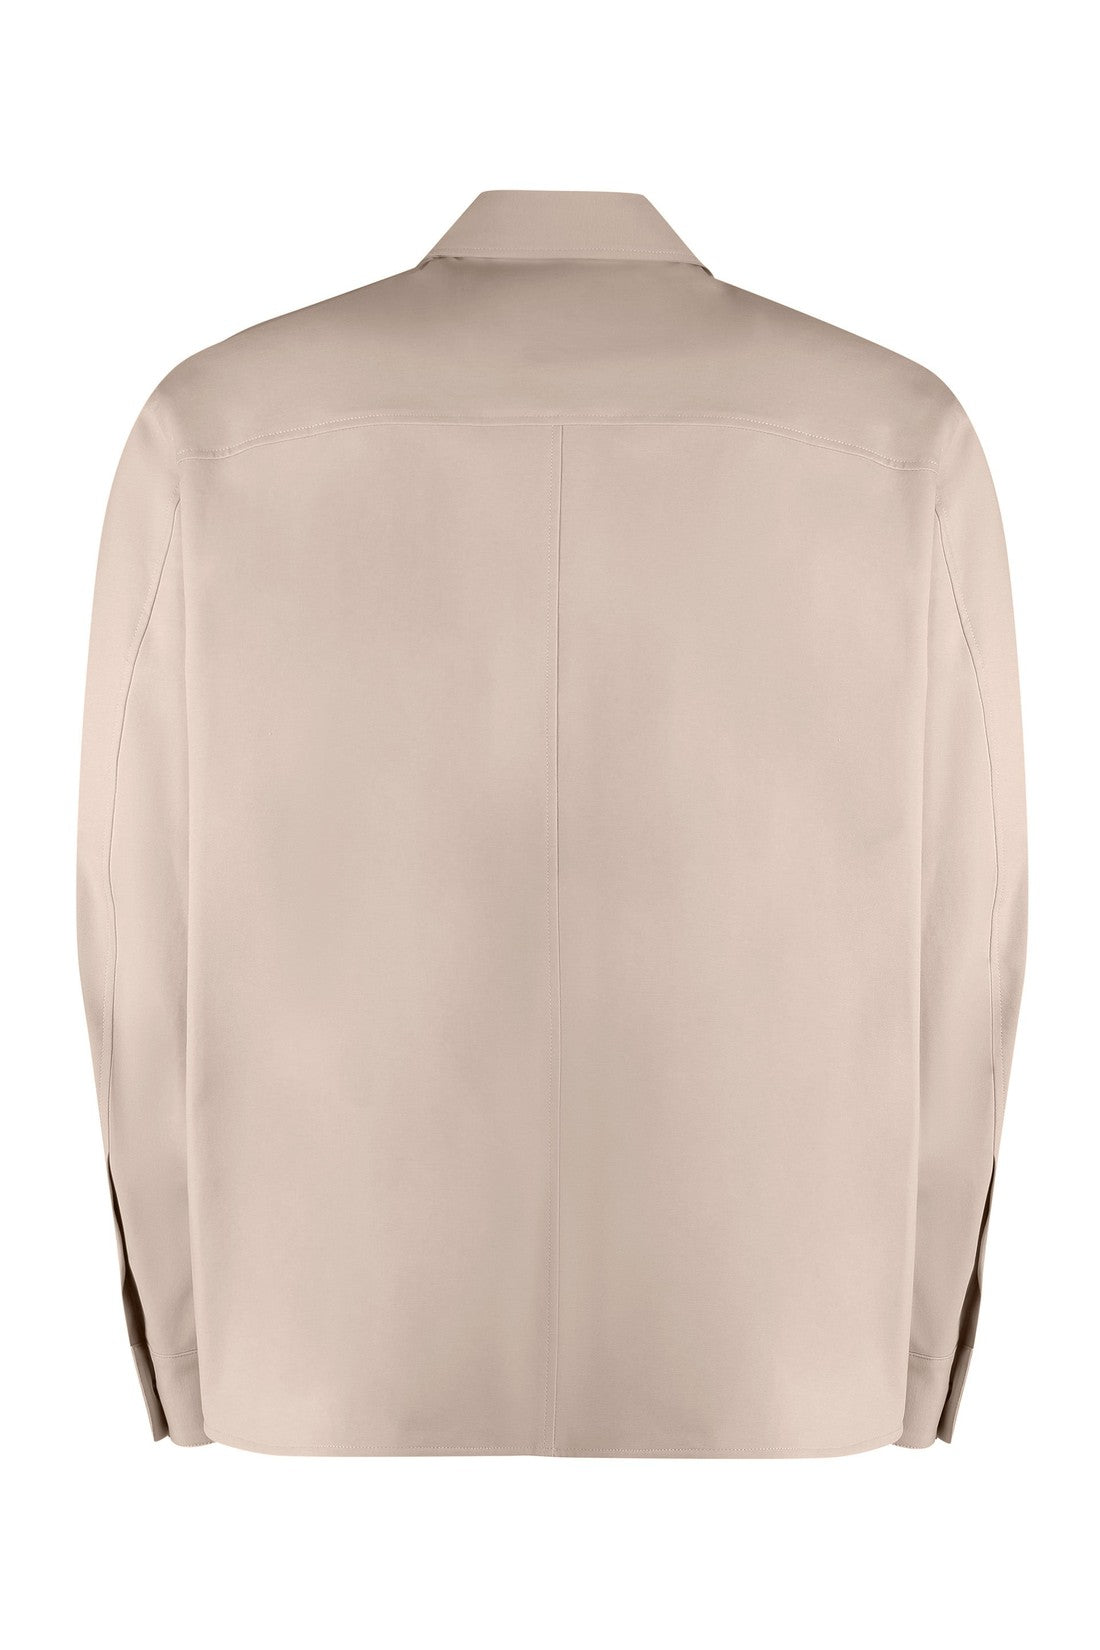 Dolce & Gabbana-OUTLET-SALE-Technical fabric overshirt-ARCHIVIST